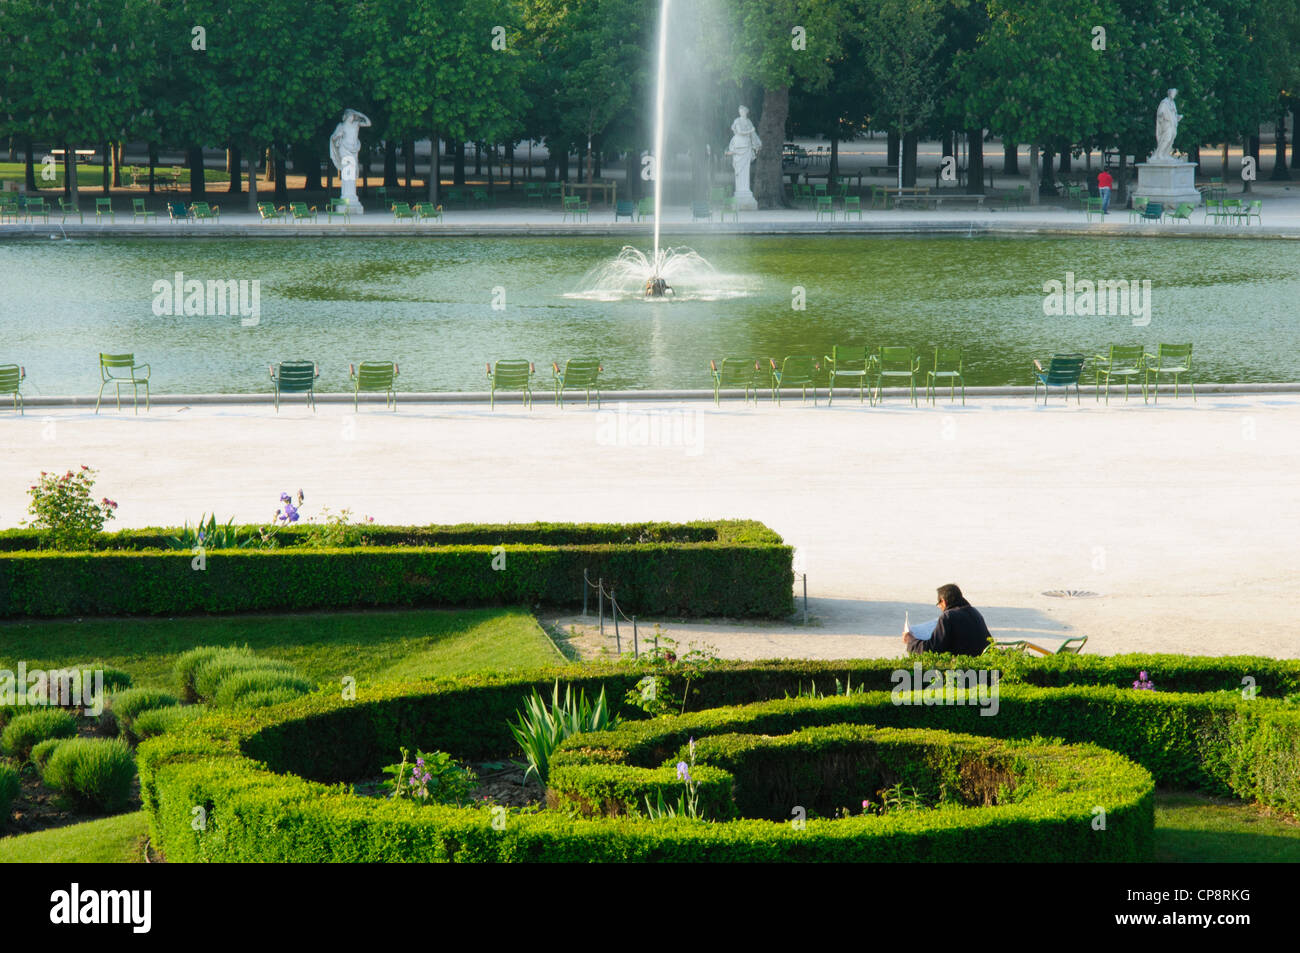 Formal gardens of Jardin des Tuileries, Paris, France Stock Photo